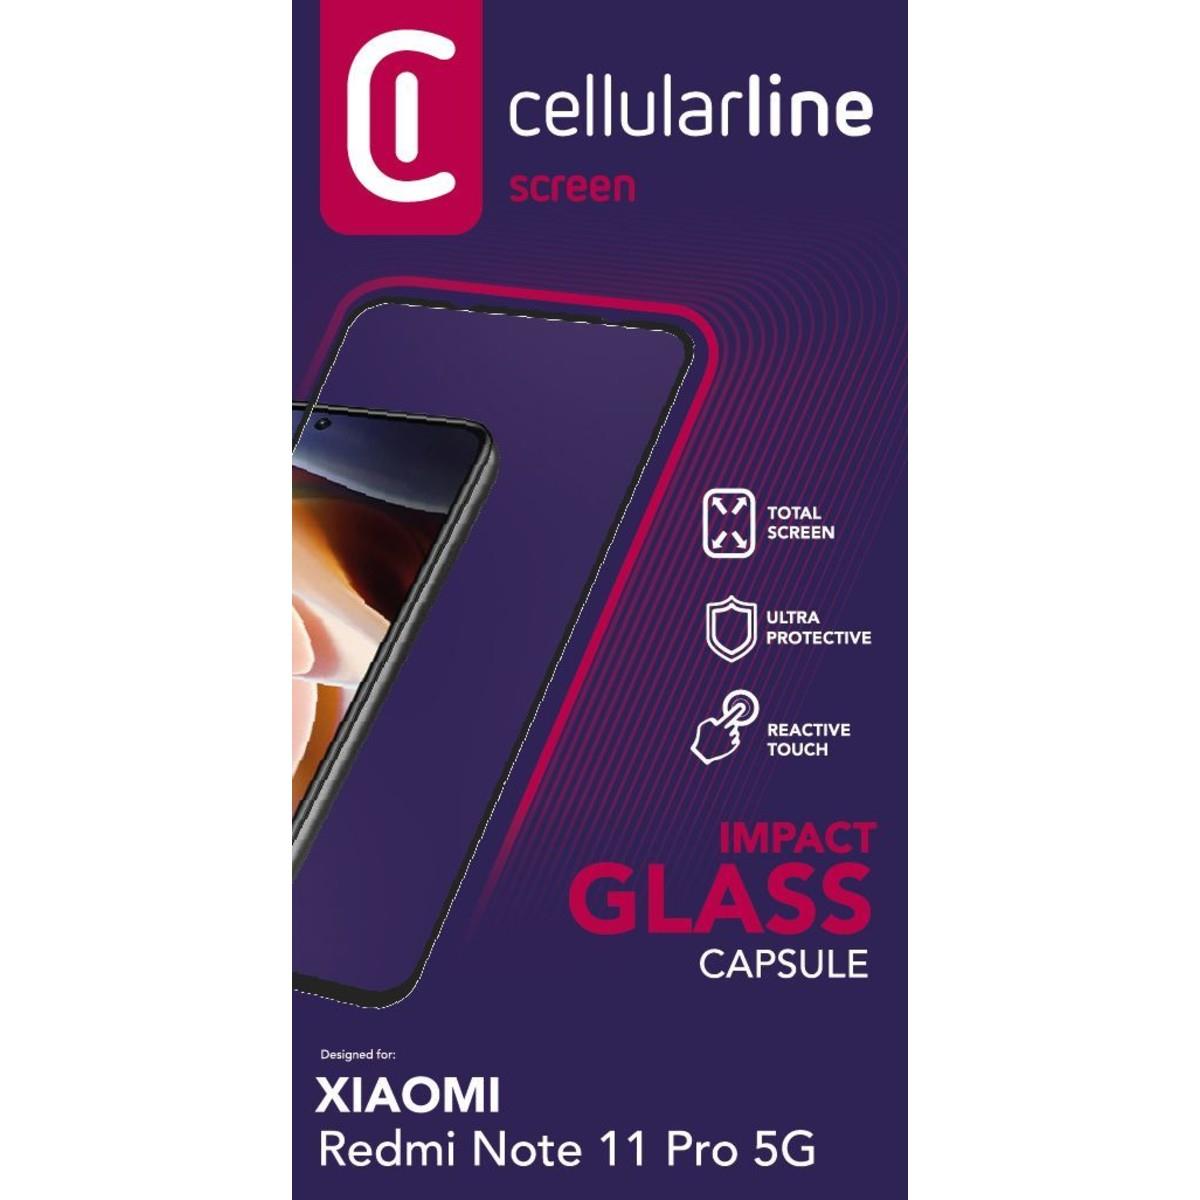 Schutzglas IMPACT GLASS CAPSULE für Xiaomi Redmi Note 11 Pro 4G/5G